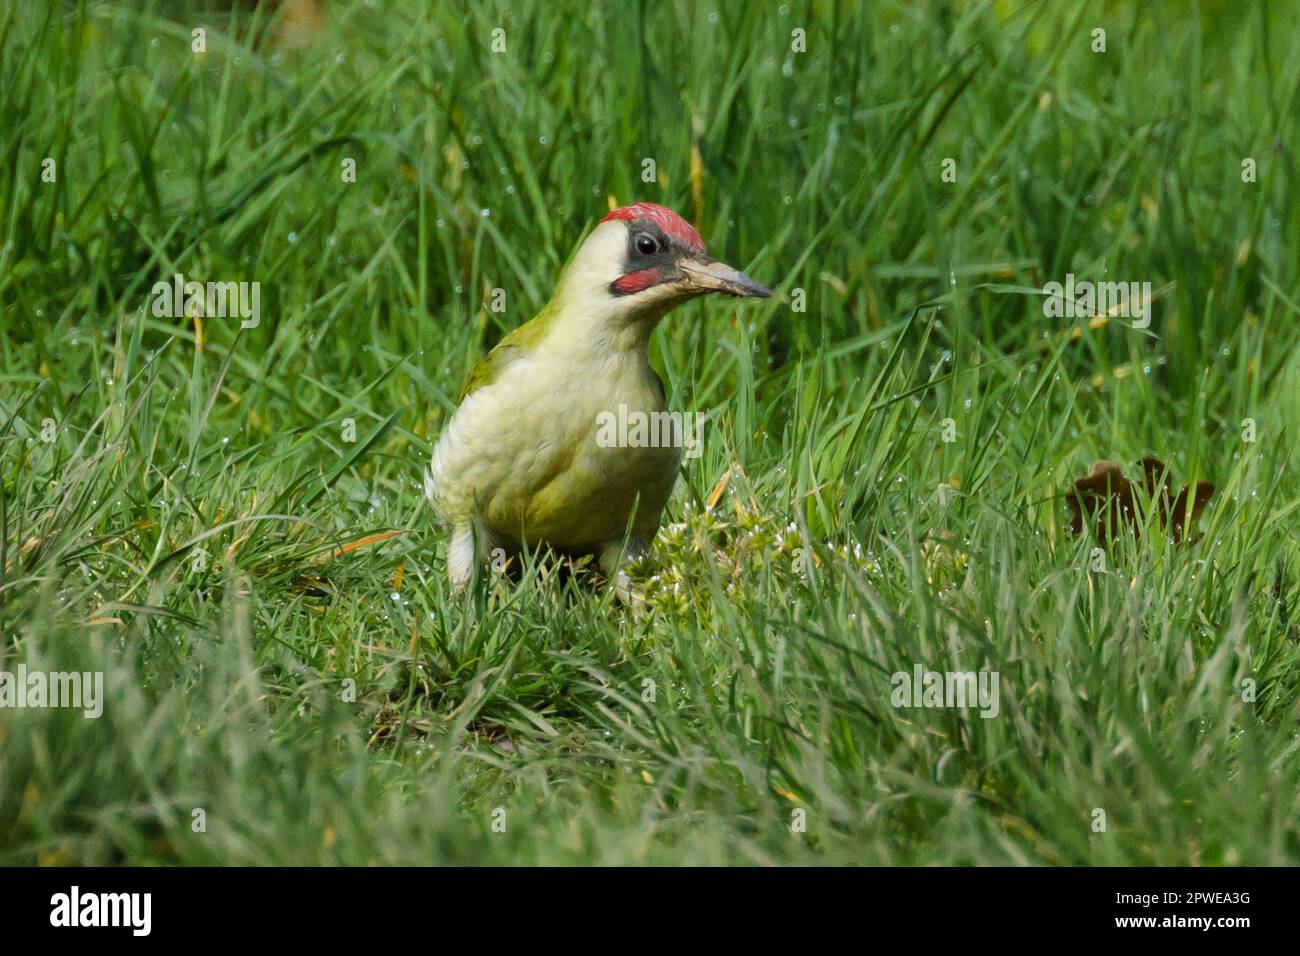 Male European Green Woodpecker, Picus viridis, with a muddy beak, on grass. Photo by Amanda Rose/Alamy Stock Photo